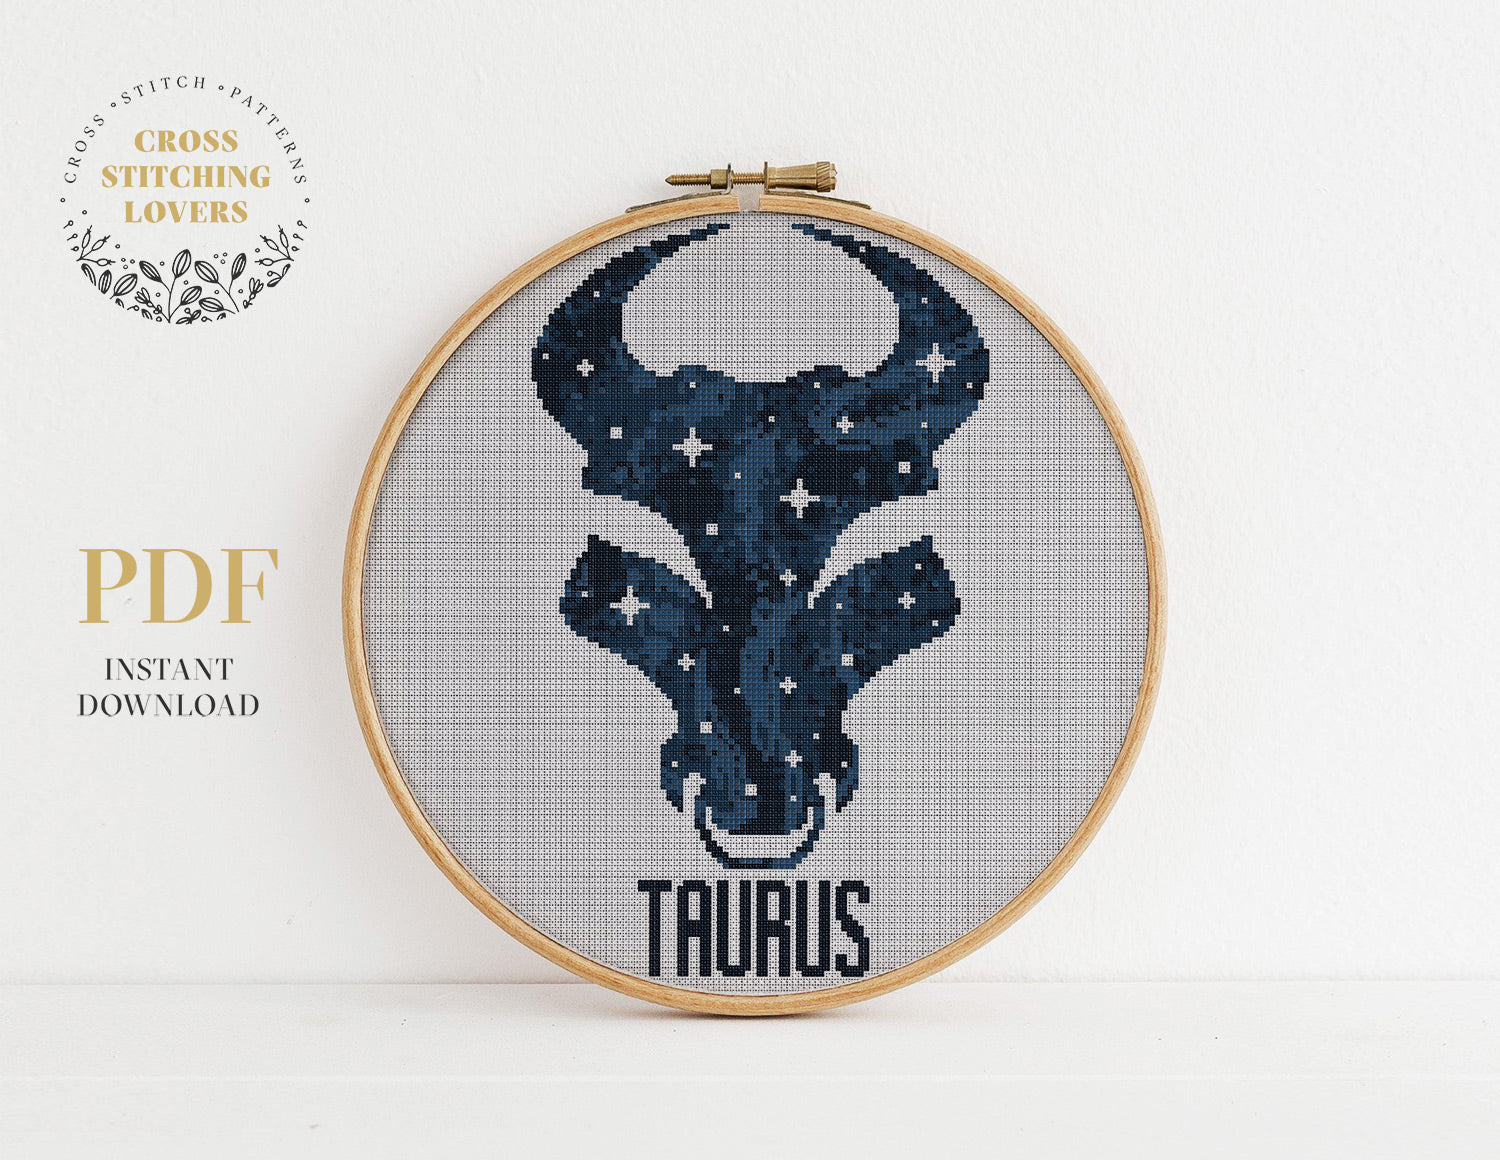 Taurus zodiac sign - Cross stitch pattern